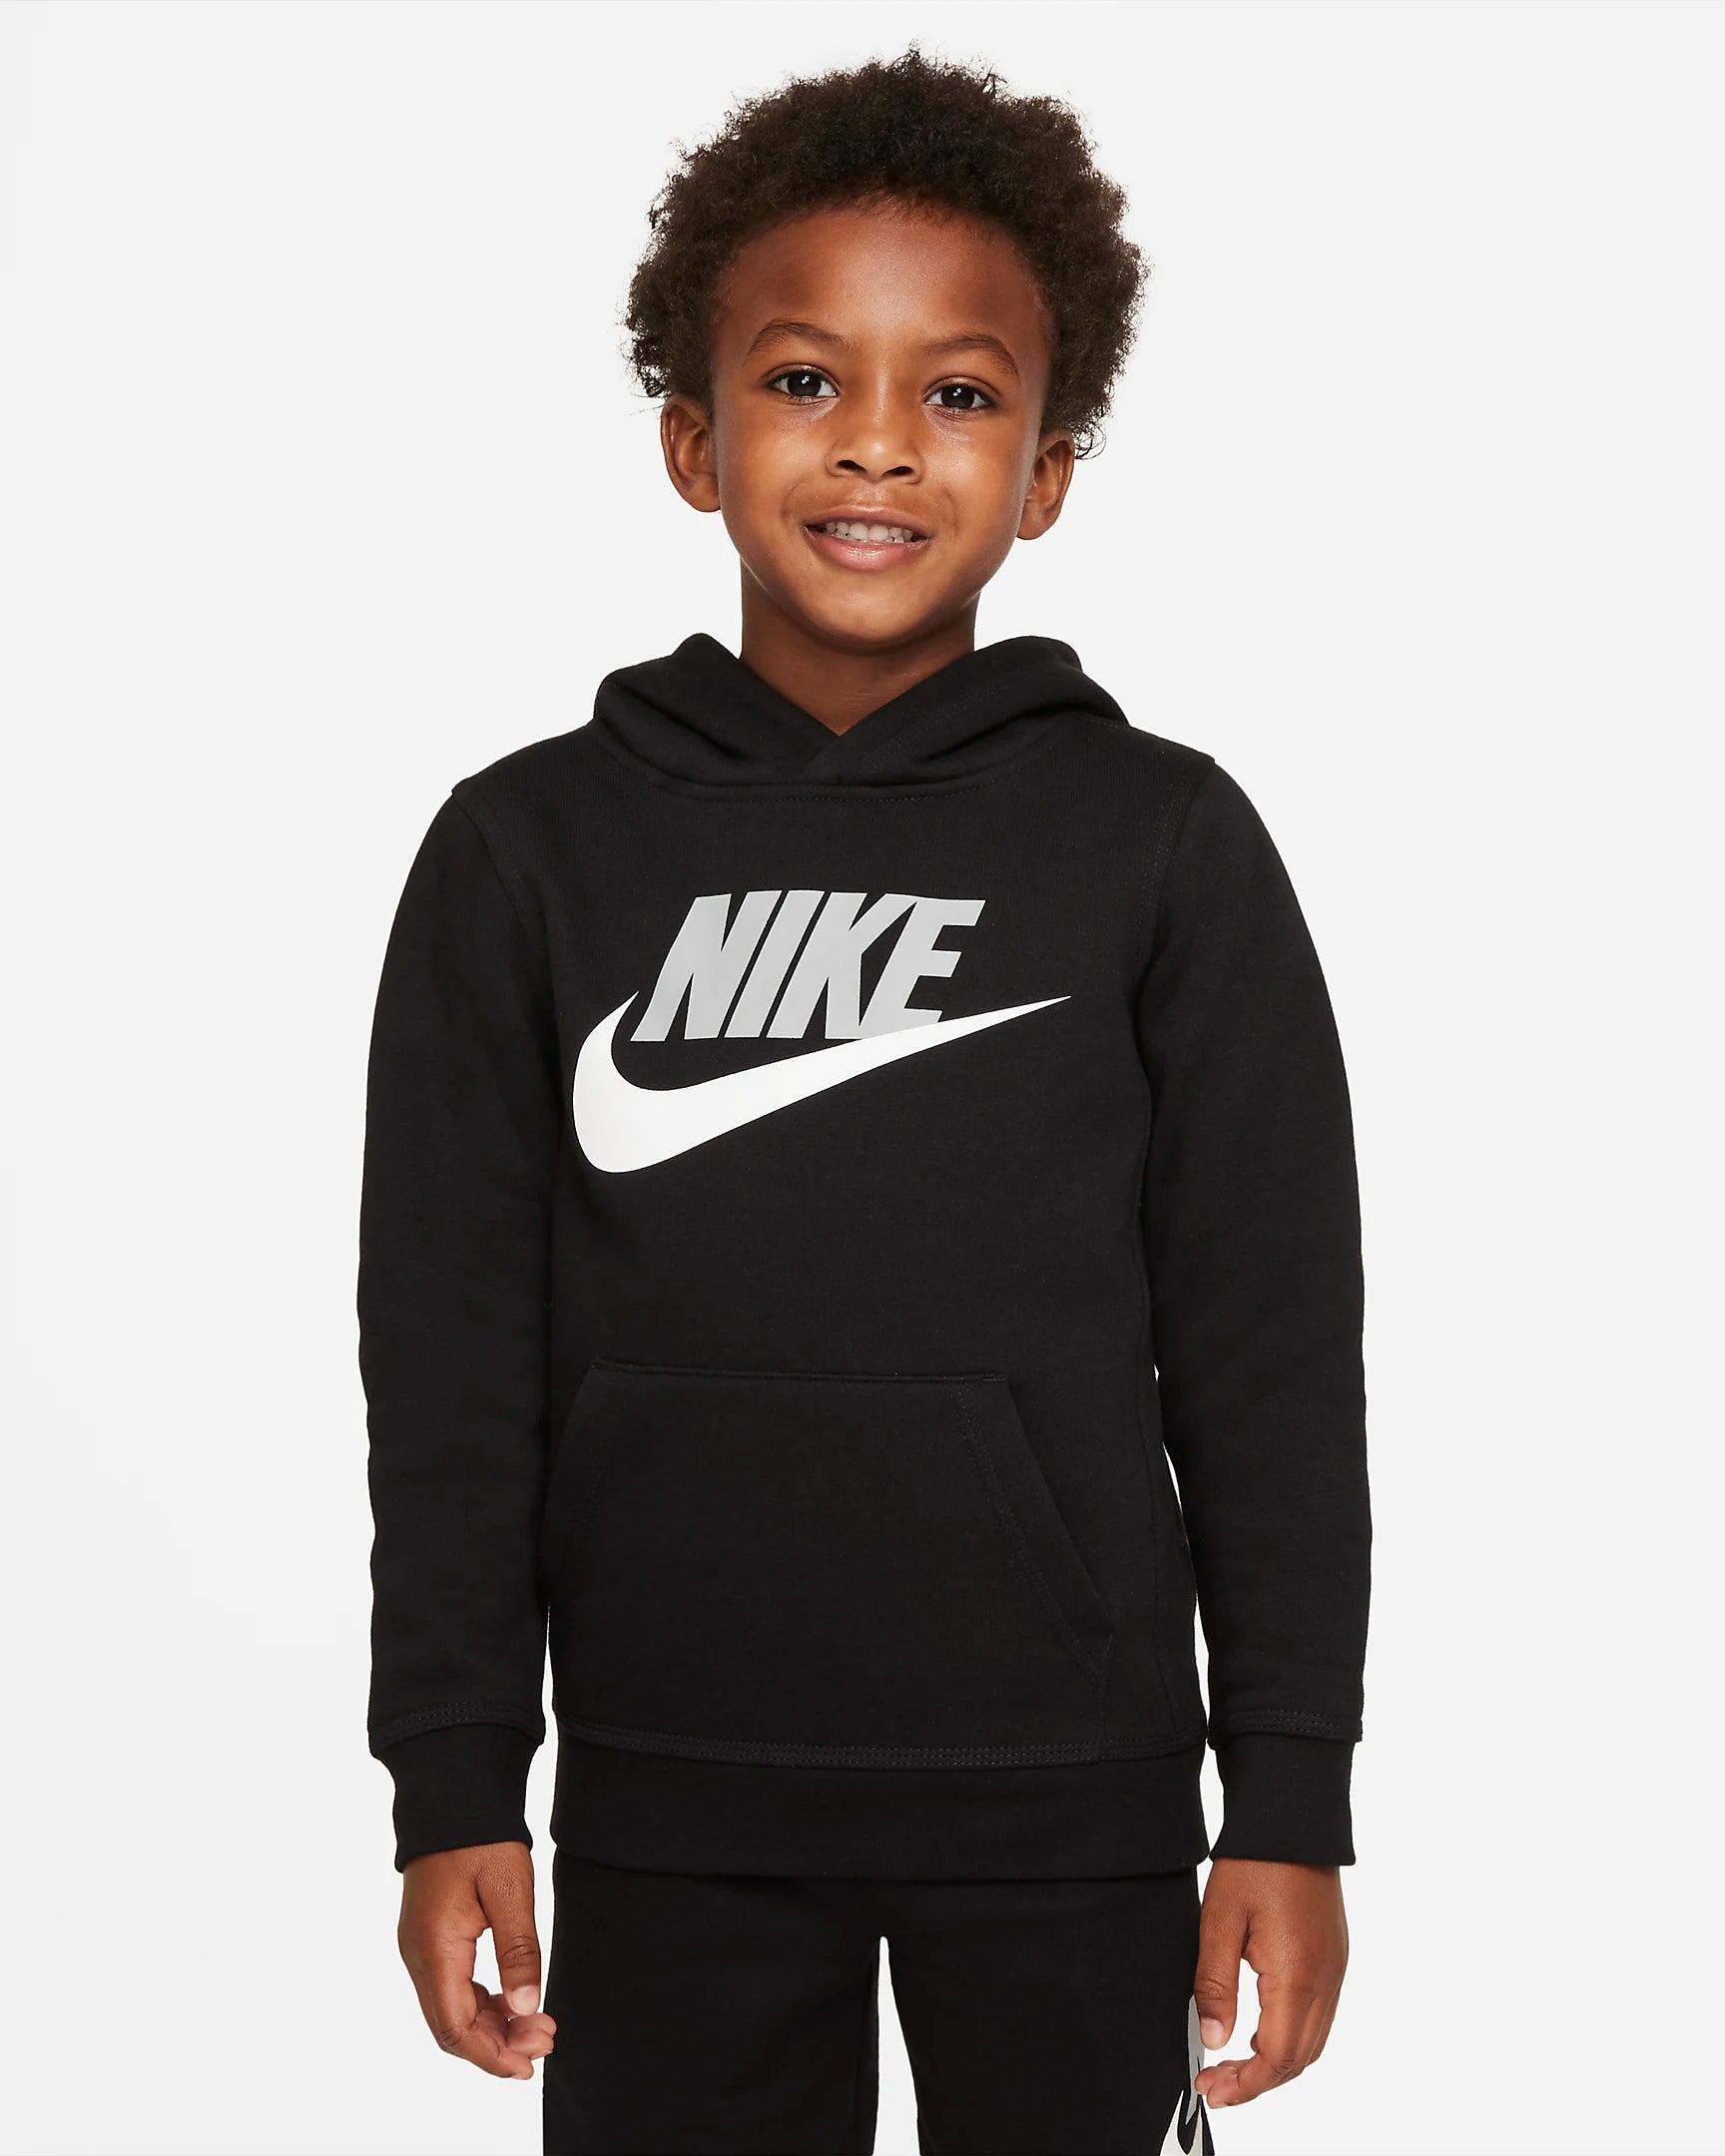 Sweat Nike Club Fleece Enfant - Noir/Blanc/Gris